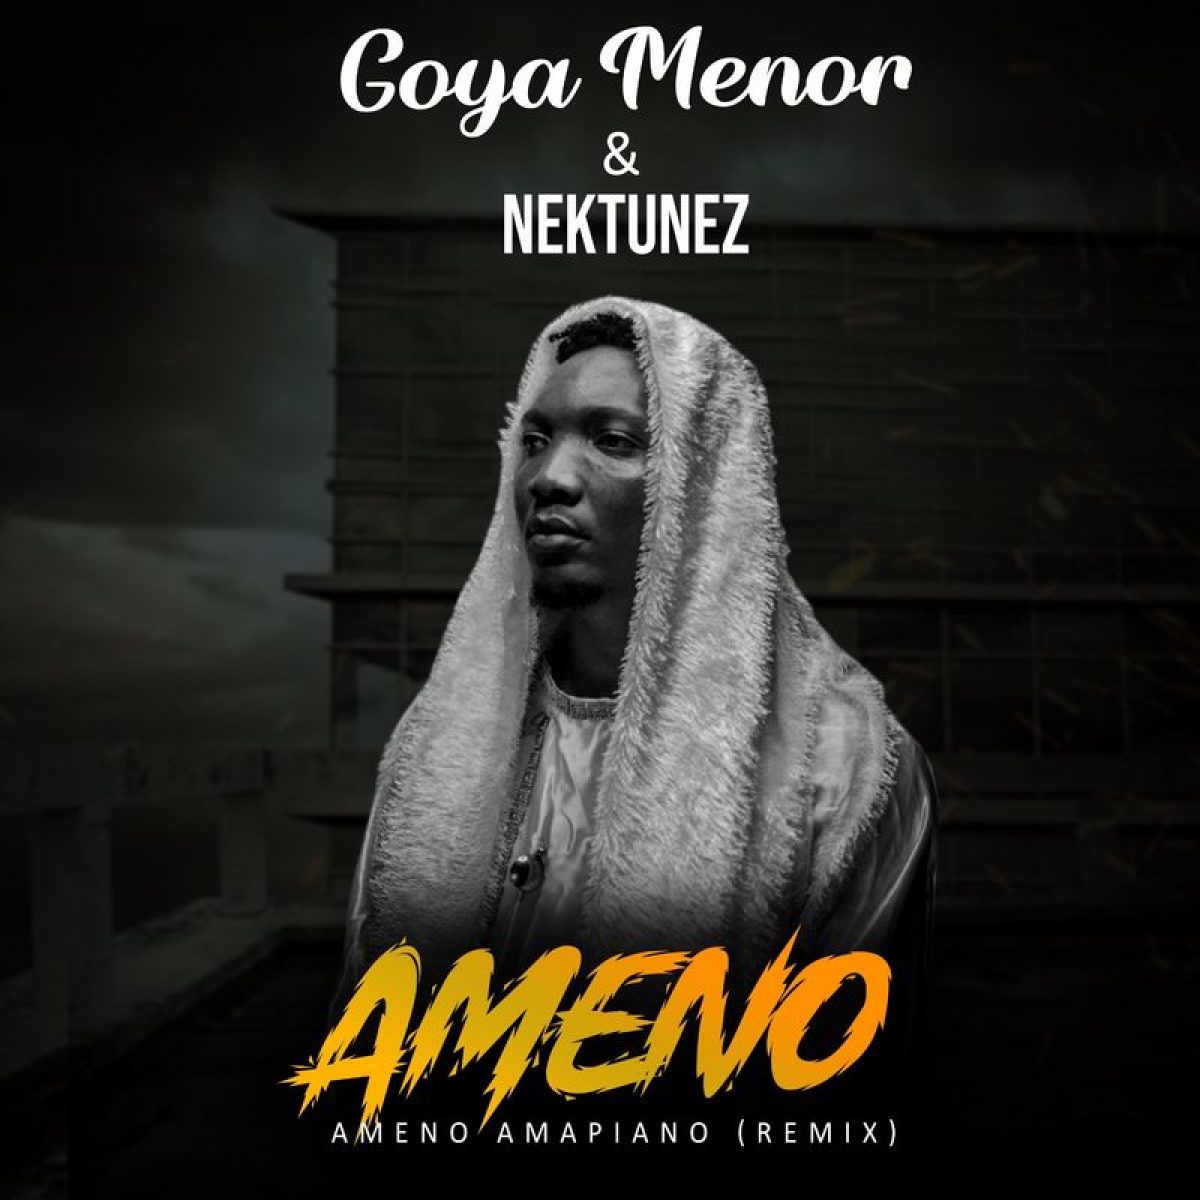 Goya Menor & Nektunez – Ameno Amapiano (Remix)